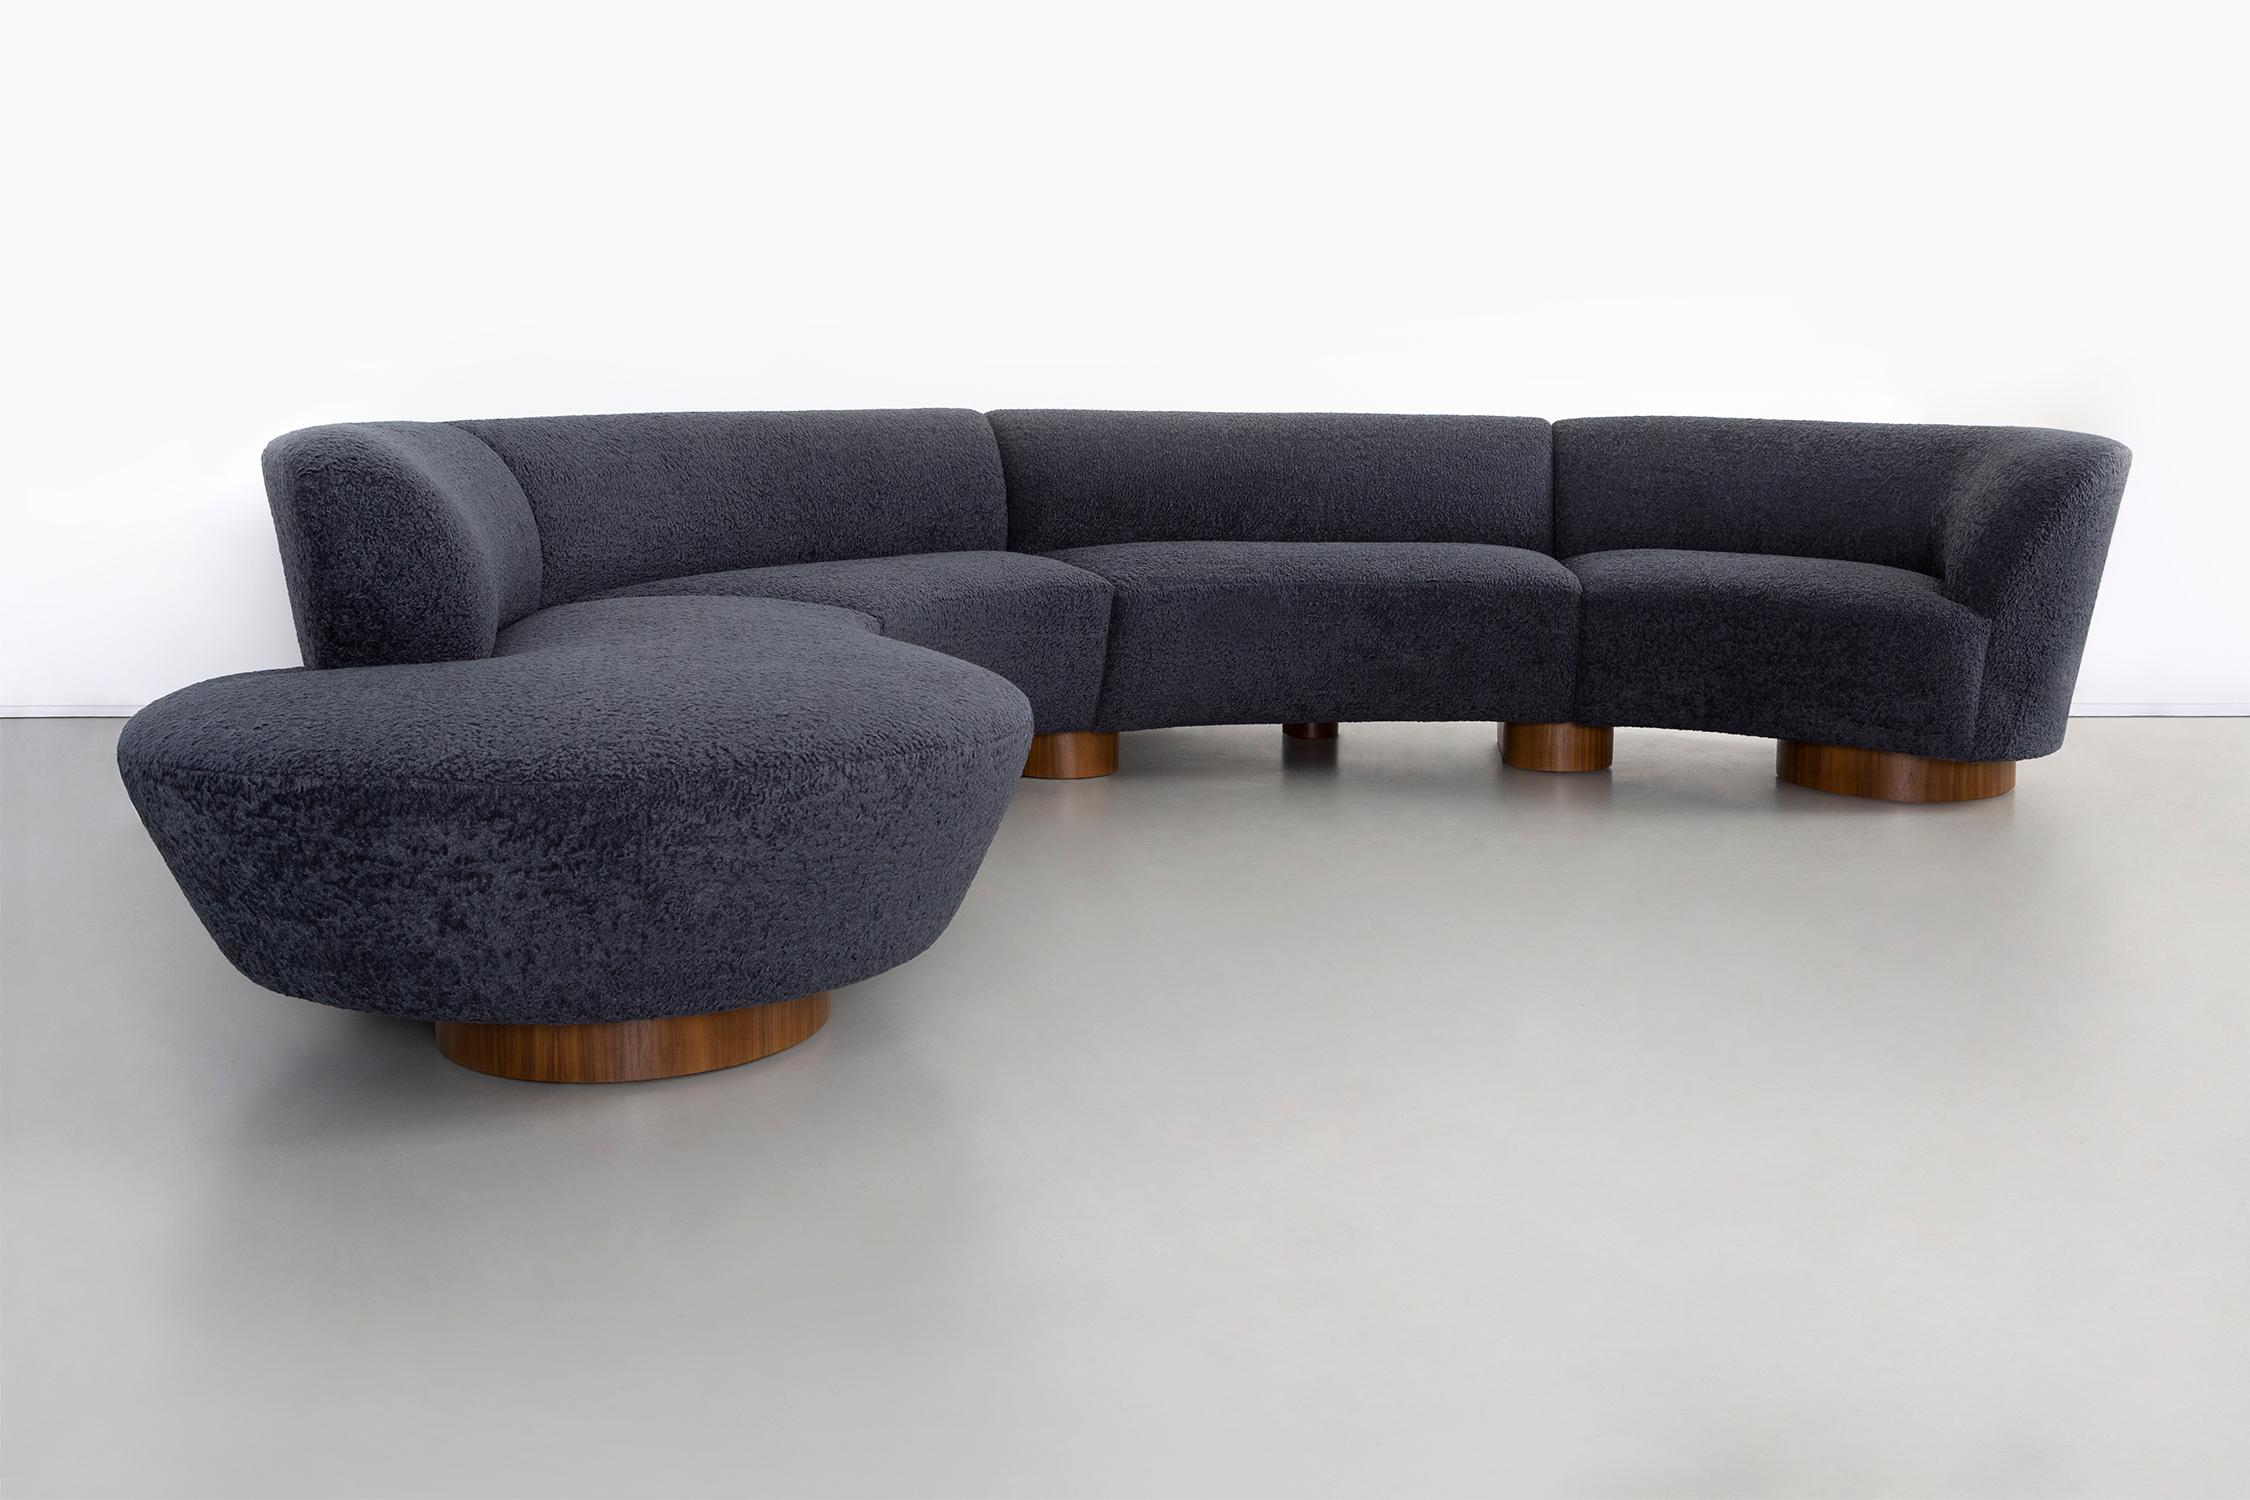 three-piece sectional sofa

designed by Vladimir Kagan for Directional

USA, c 1980

custom fabric, custom base, + poplar